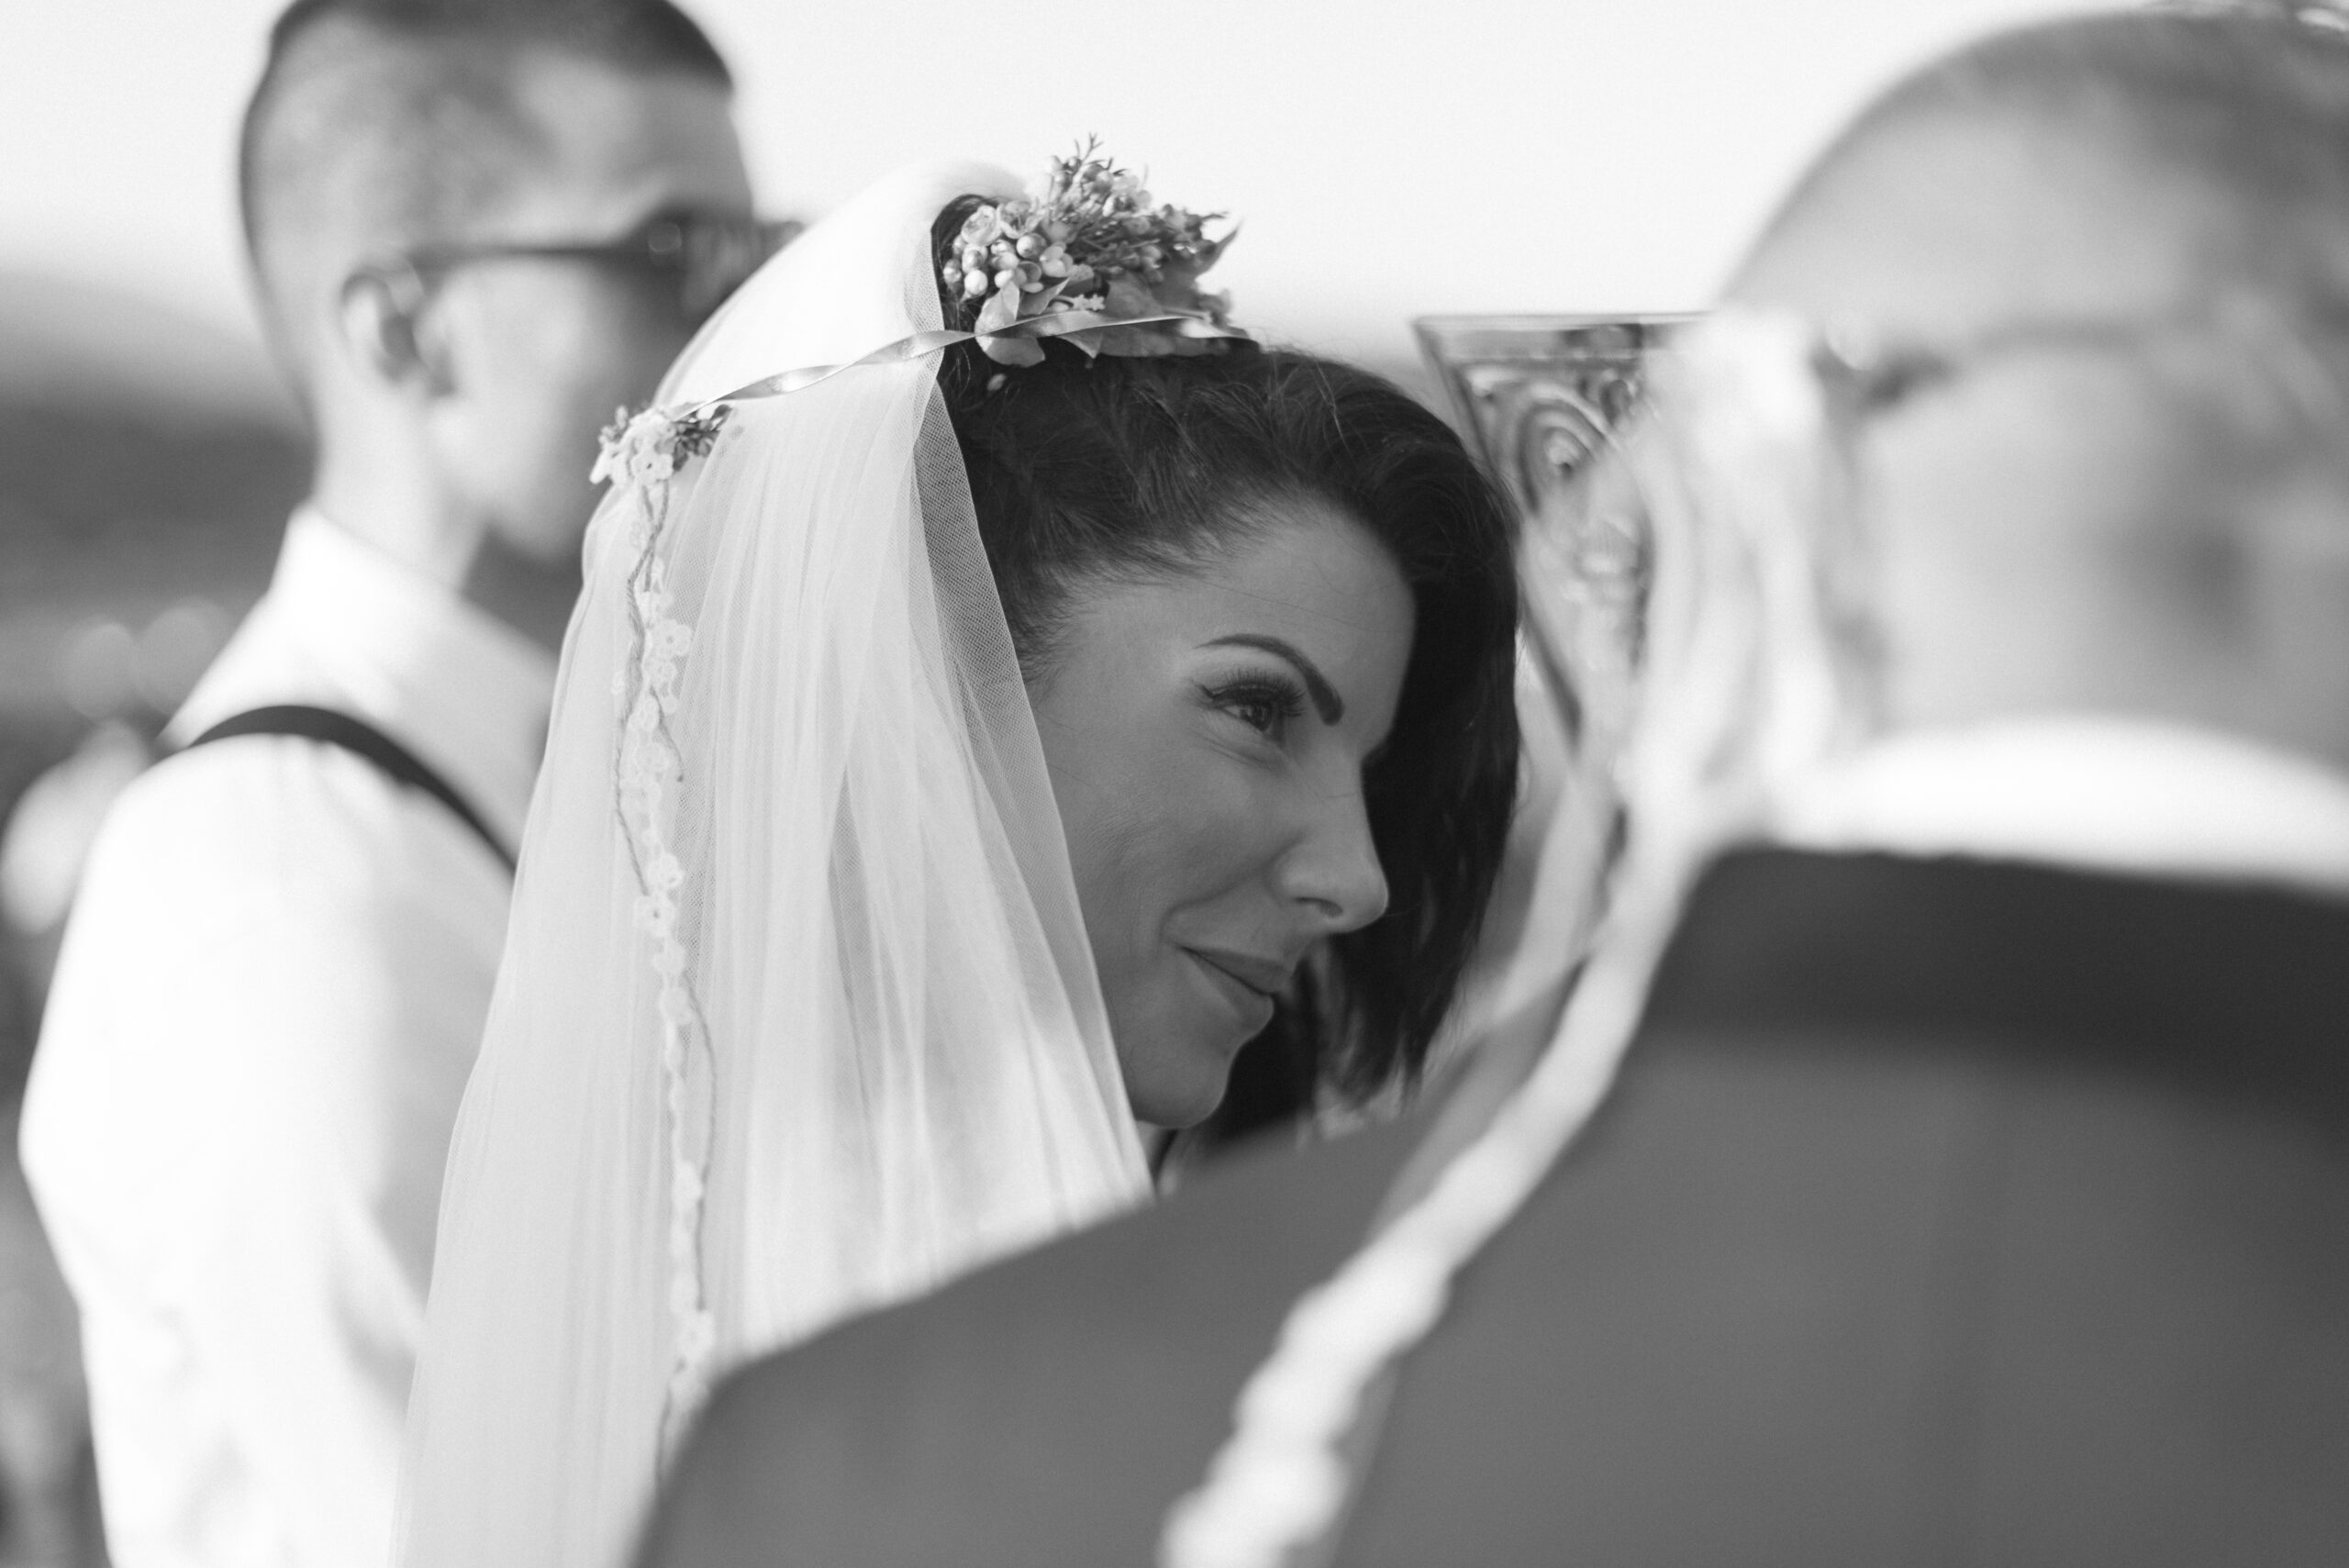 Island Athens riviera wedding in greece bougainvillea design γάμος στην Αθηναϊκή ριβιέρα με θέμα τη βουκαμβίλια διακόσμηση γάμου